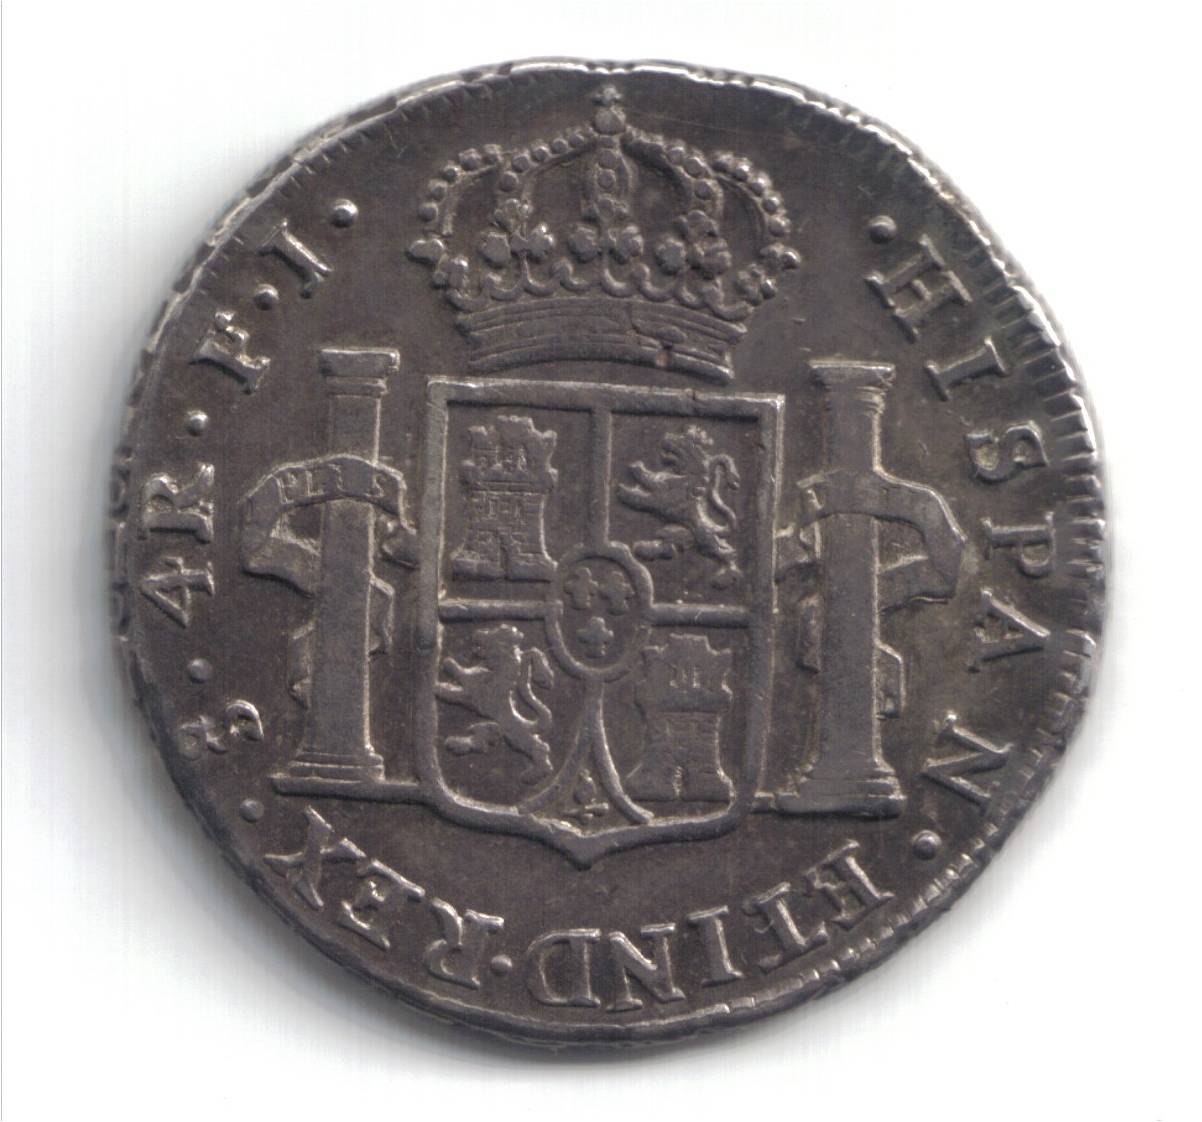 Santiago 1807 -FJ 4 reales r.jpg